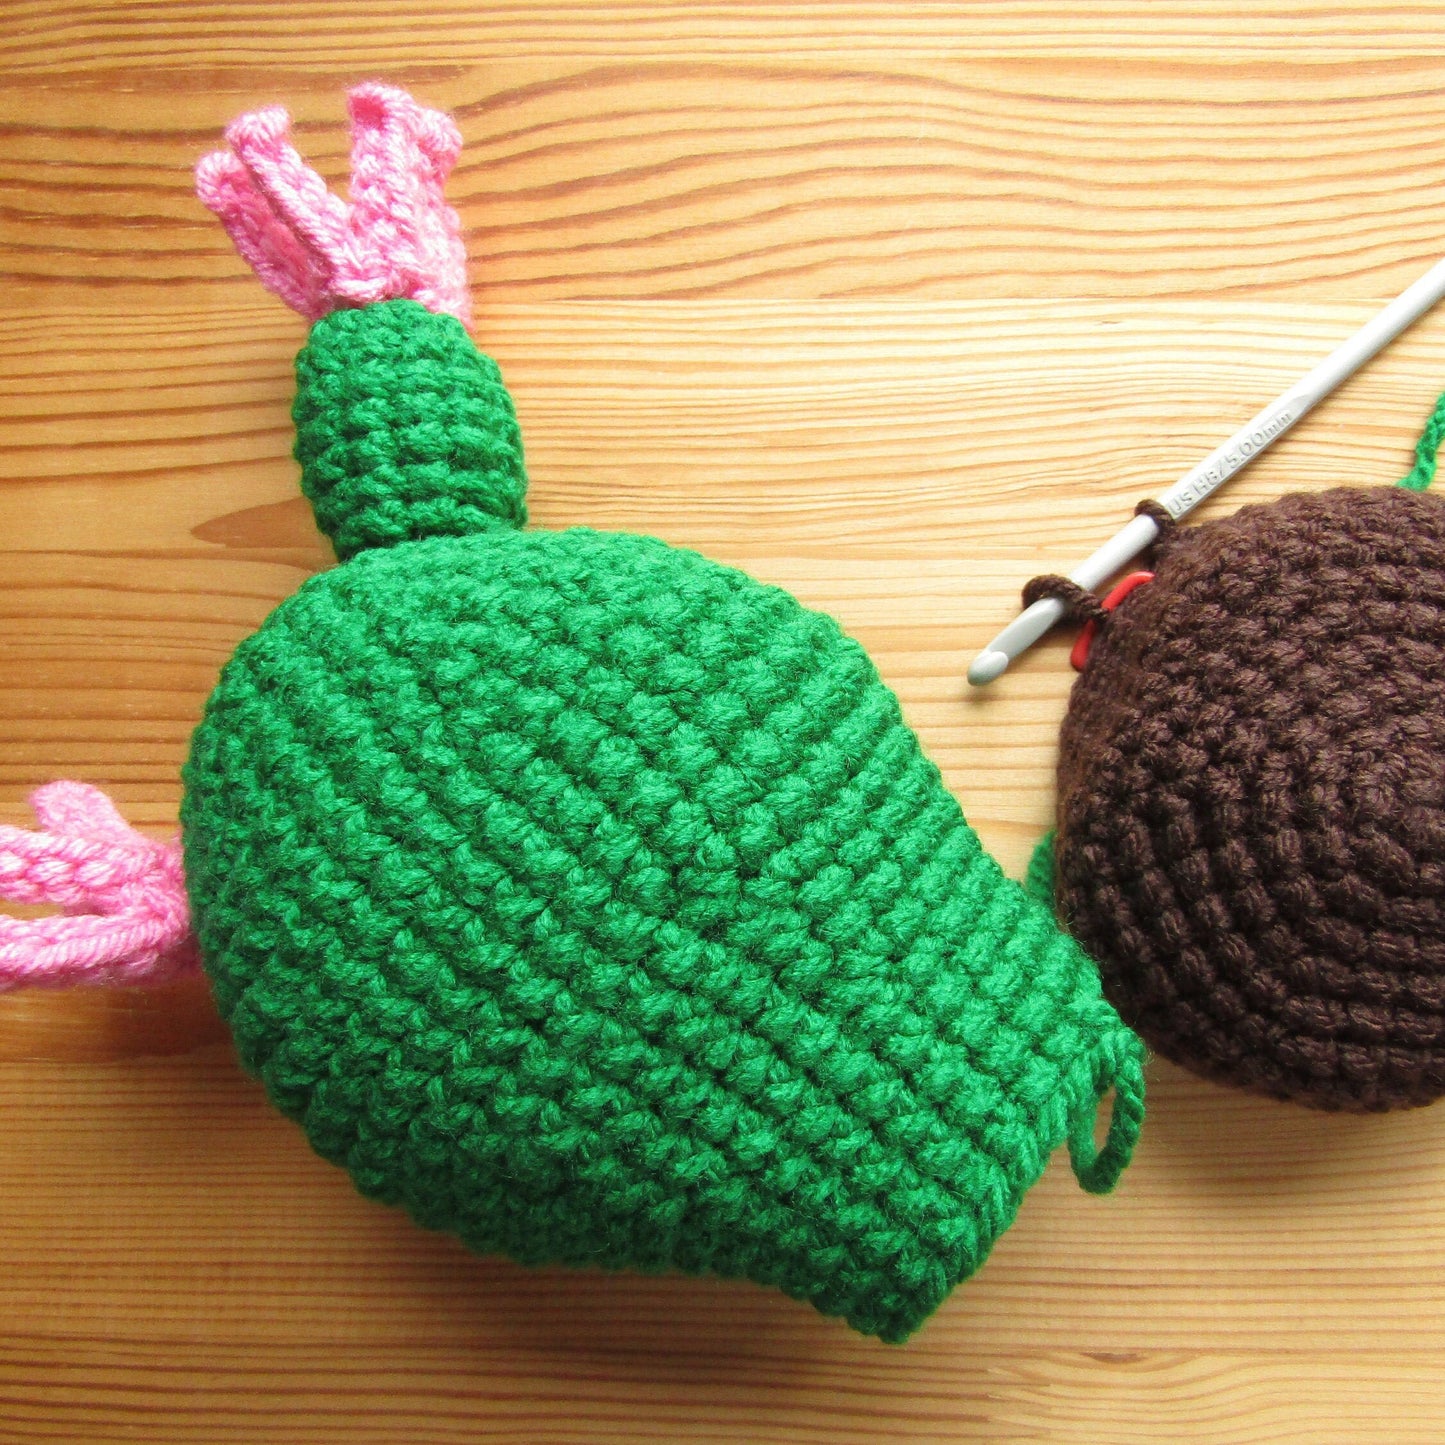 Crochet kit: Amigurumi Cactus with pot